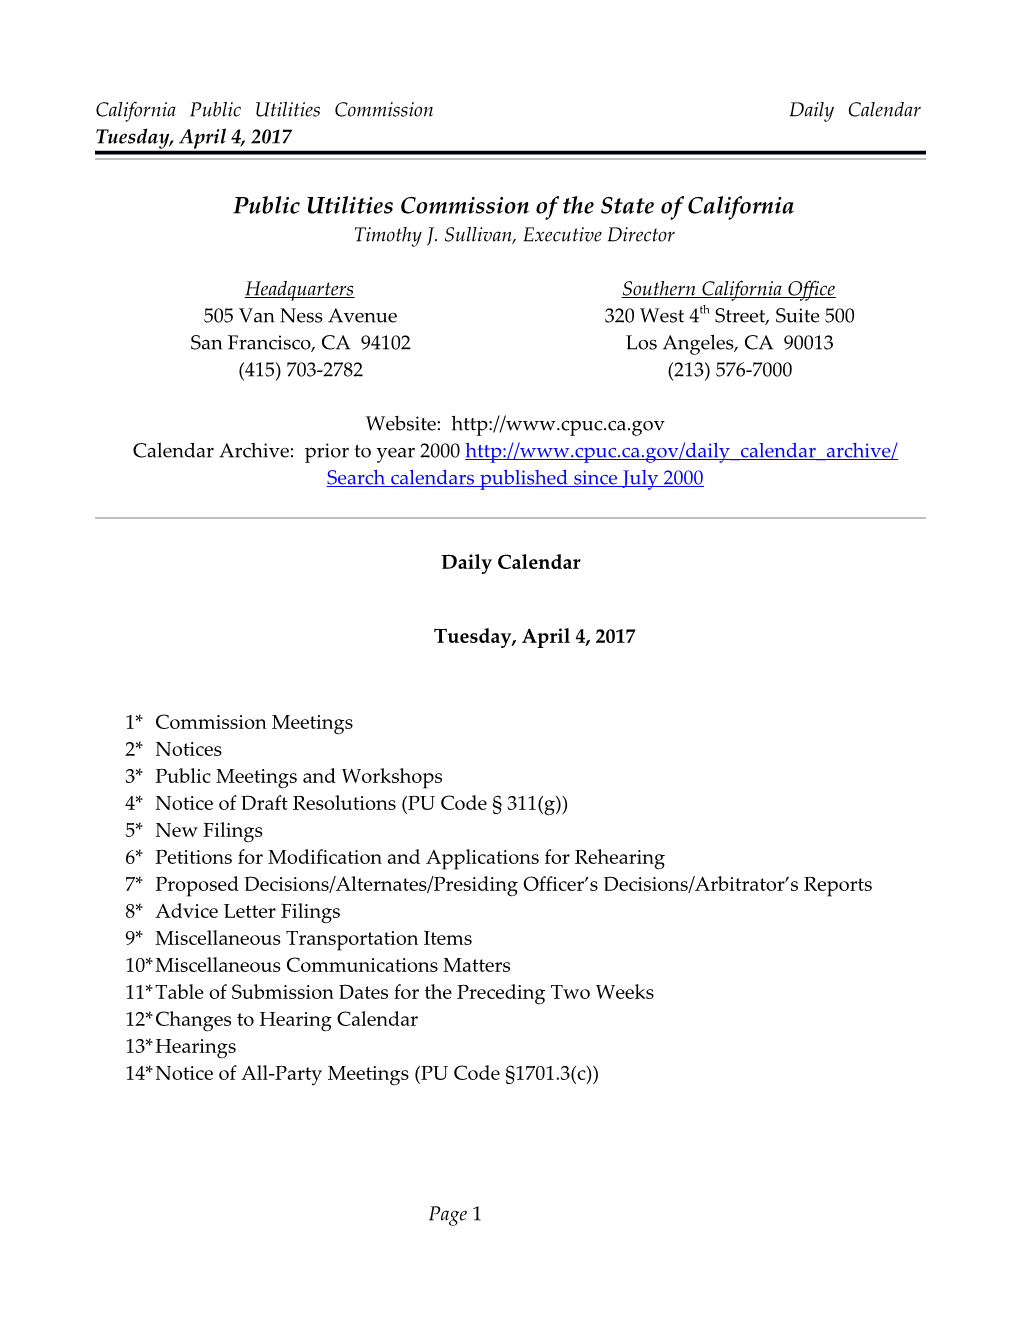 California Public Utilities Commission Daily Calendar Tuesday, April 4, 2017